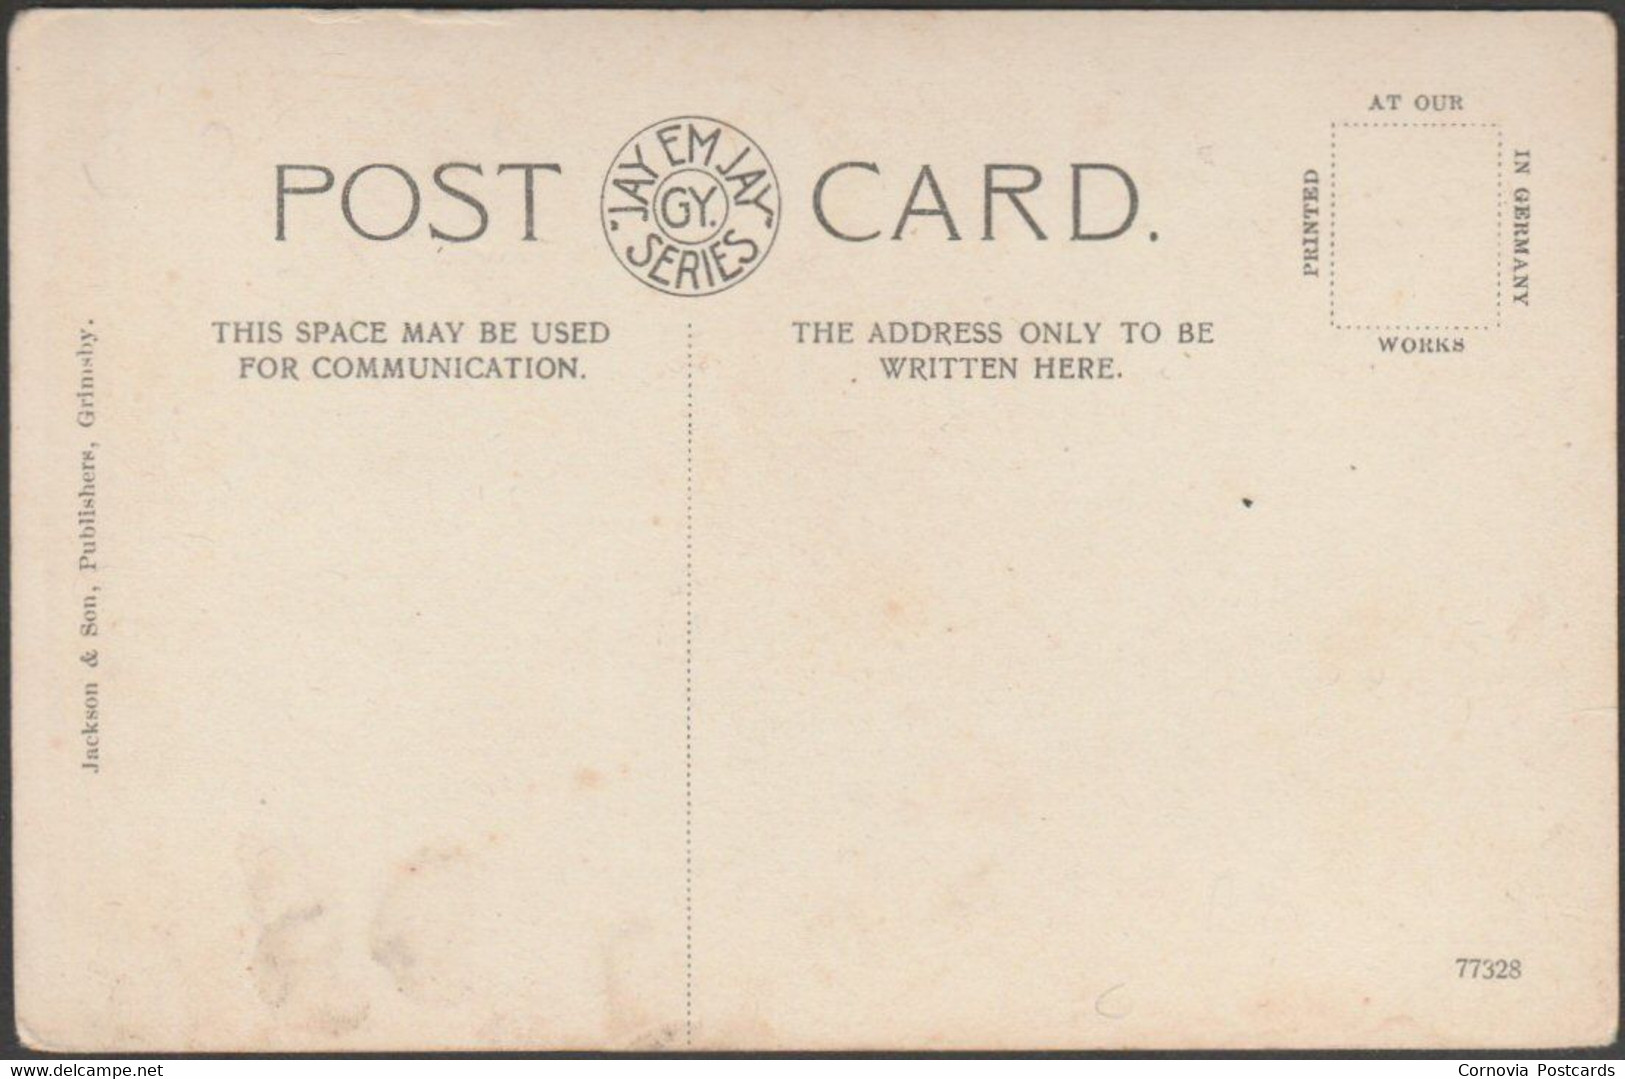 Multiview, Bradford, Yorkshire, C.1910 - Jay-Em-Jay Postcard - Bradford